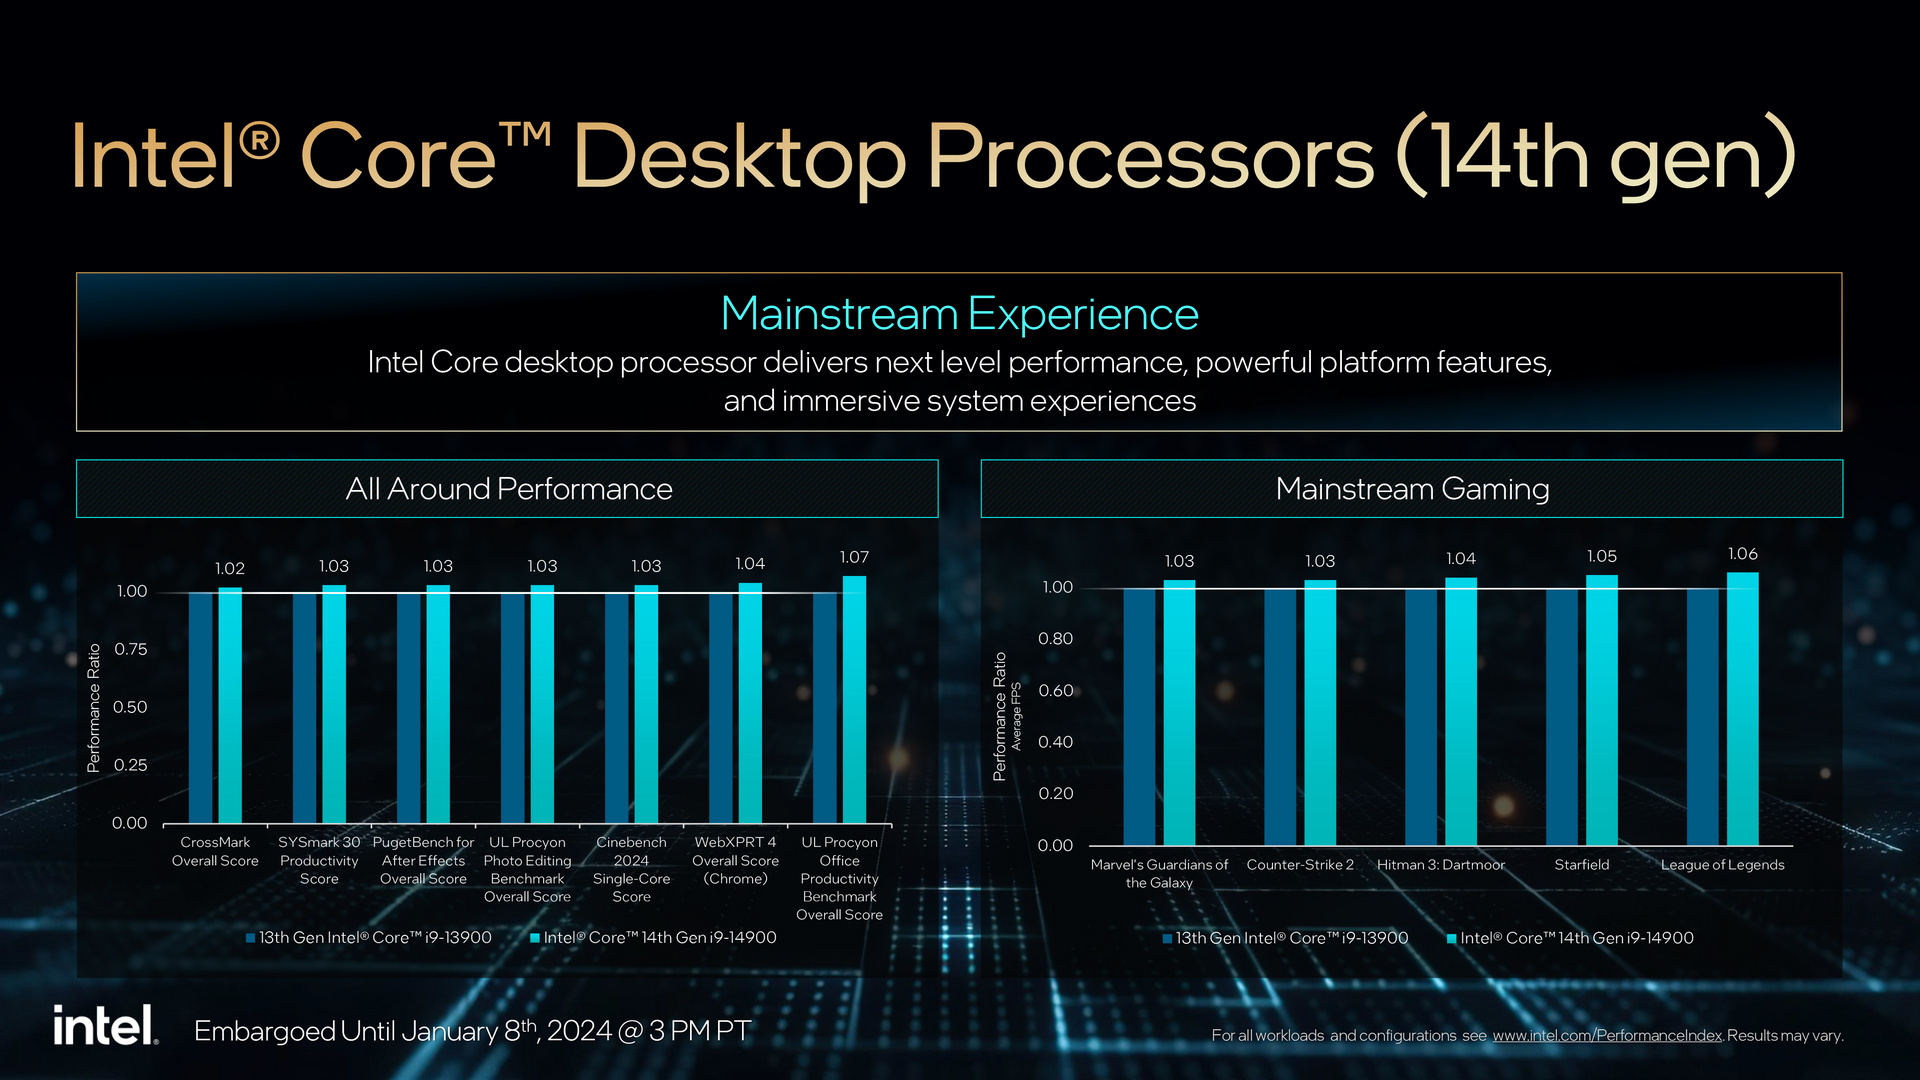 Intel Core 14th Gen Mainstream Desktop Processors